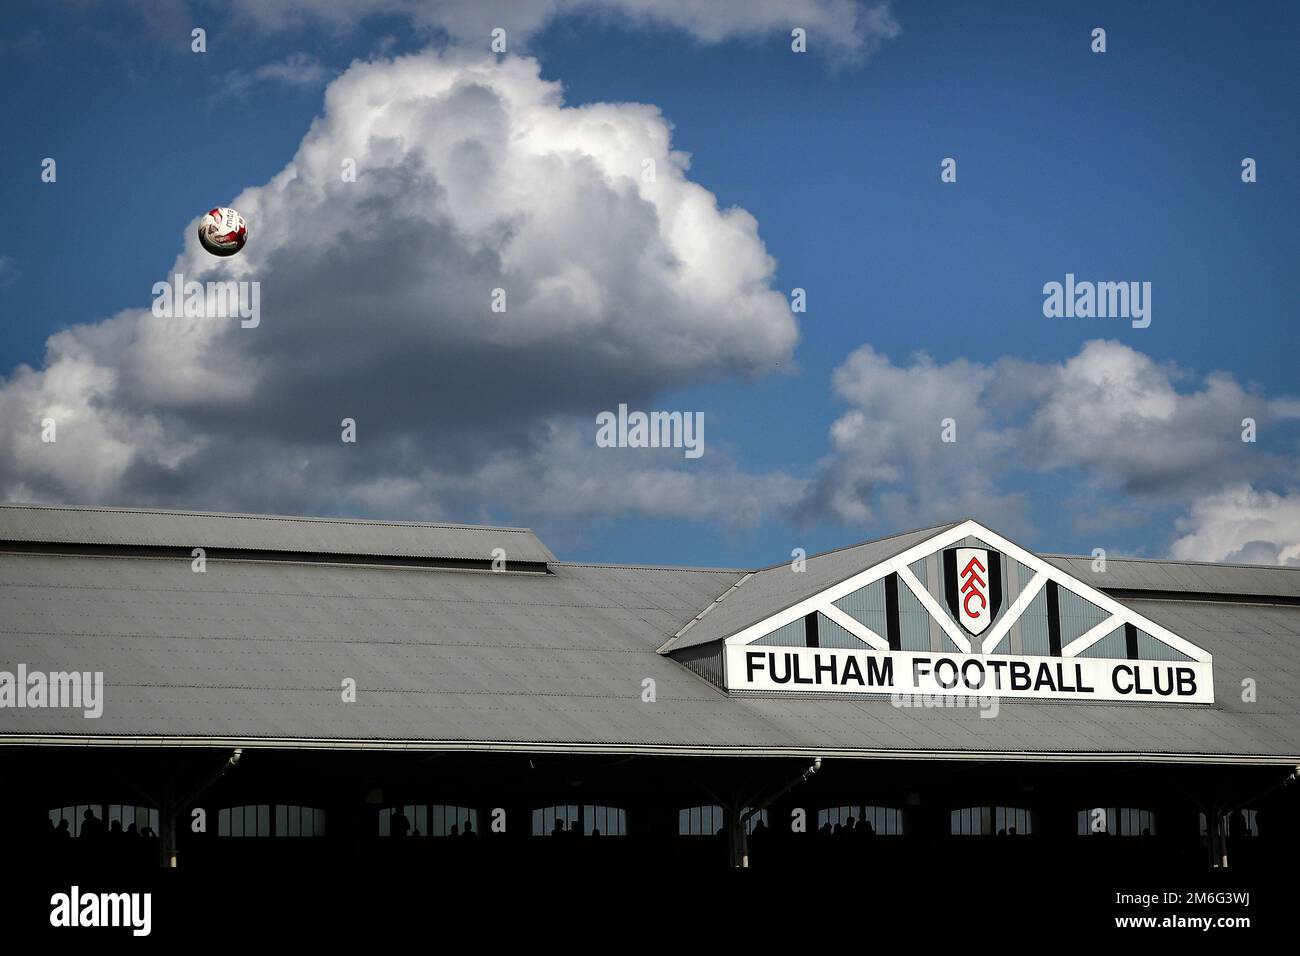 Allgemeiner Blick auf Craven Cottage, Heimat des Fulham Football Club - Fulham V Reading, Sky Bet Championship Play-Off 1. Leg, Craven Cottage, Fulham - 13. Mai 2017. Stockfoto